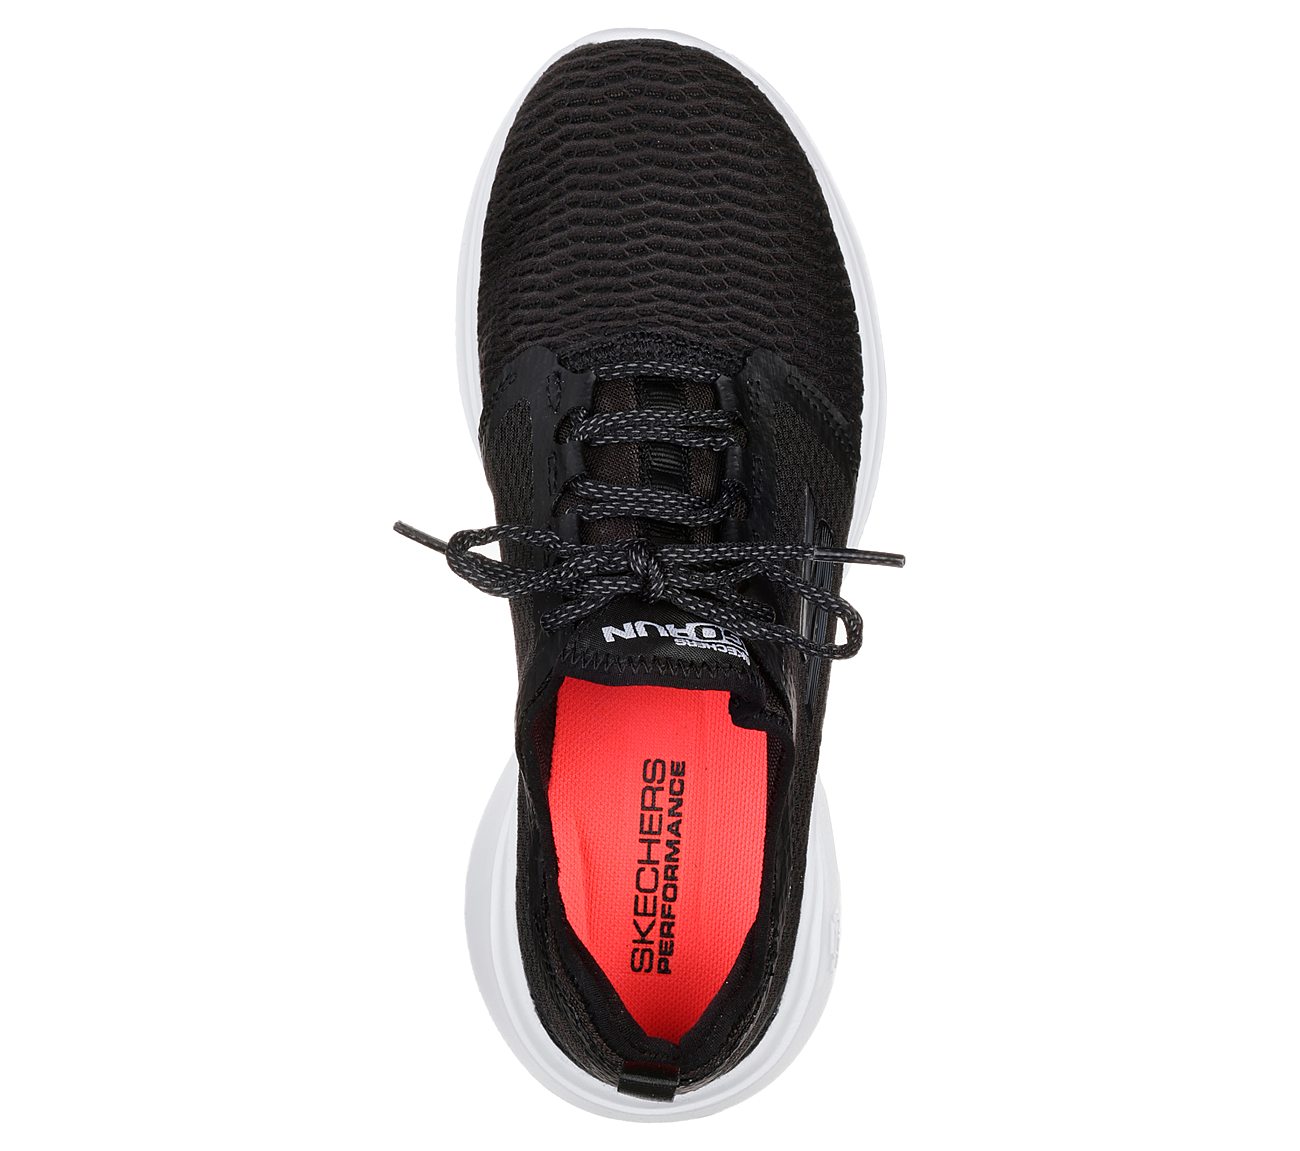 GO RUN FAST -, BLACK/WHITE Footwear Top View